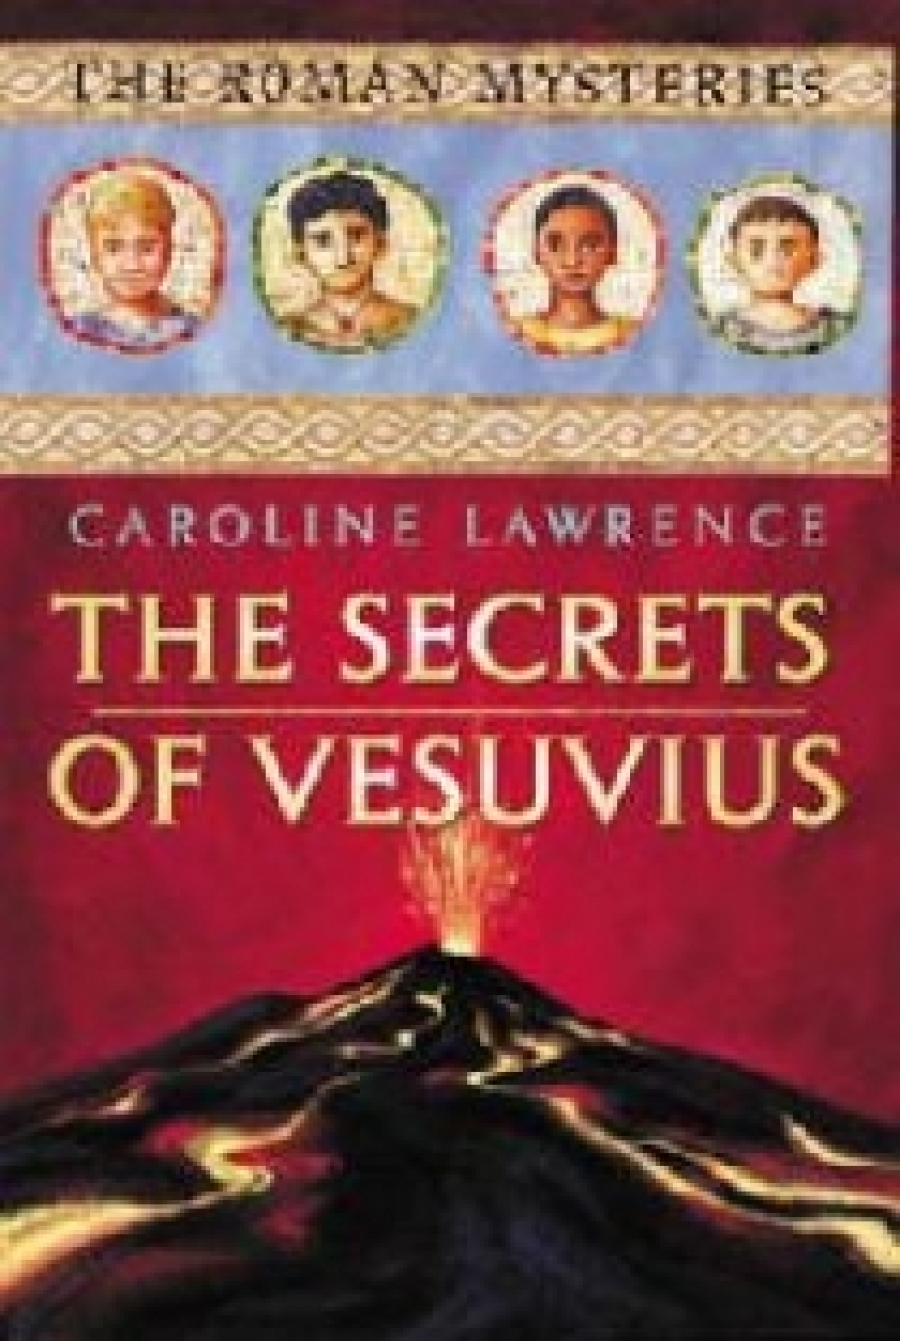 Lawrence, Caroline The Secrets of vesuvius  (The Roman Mysteries) 